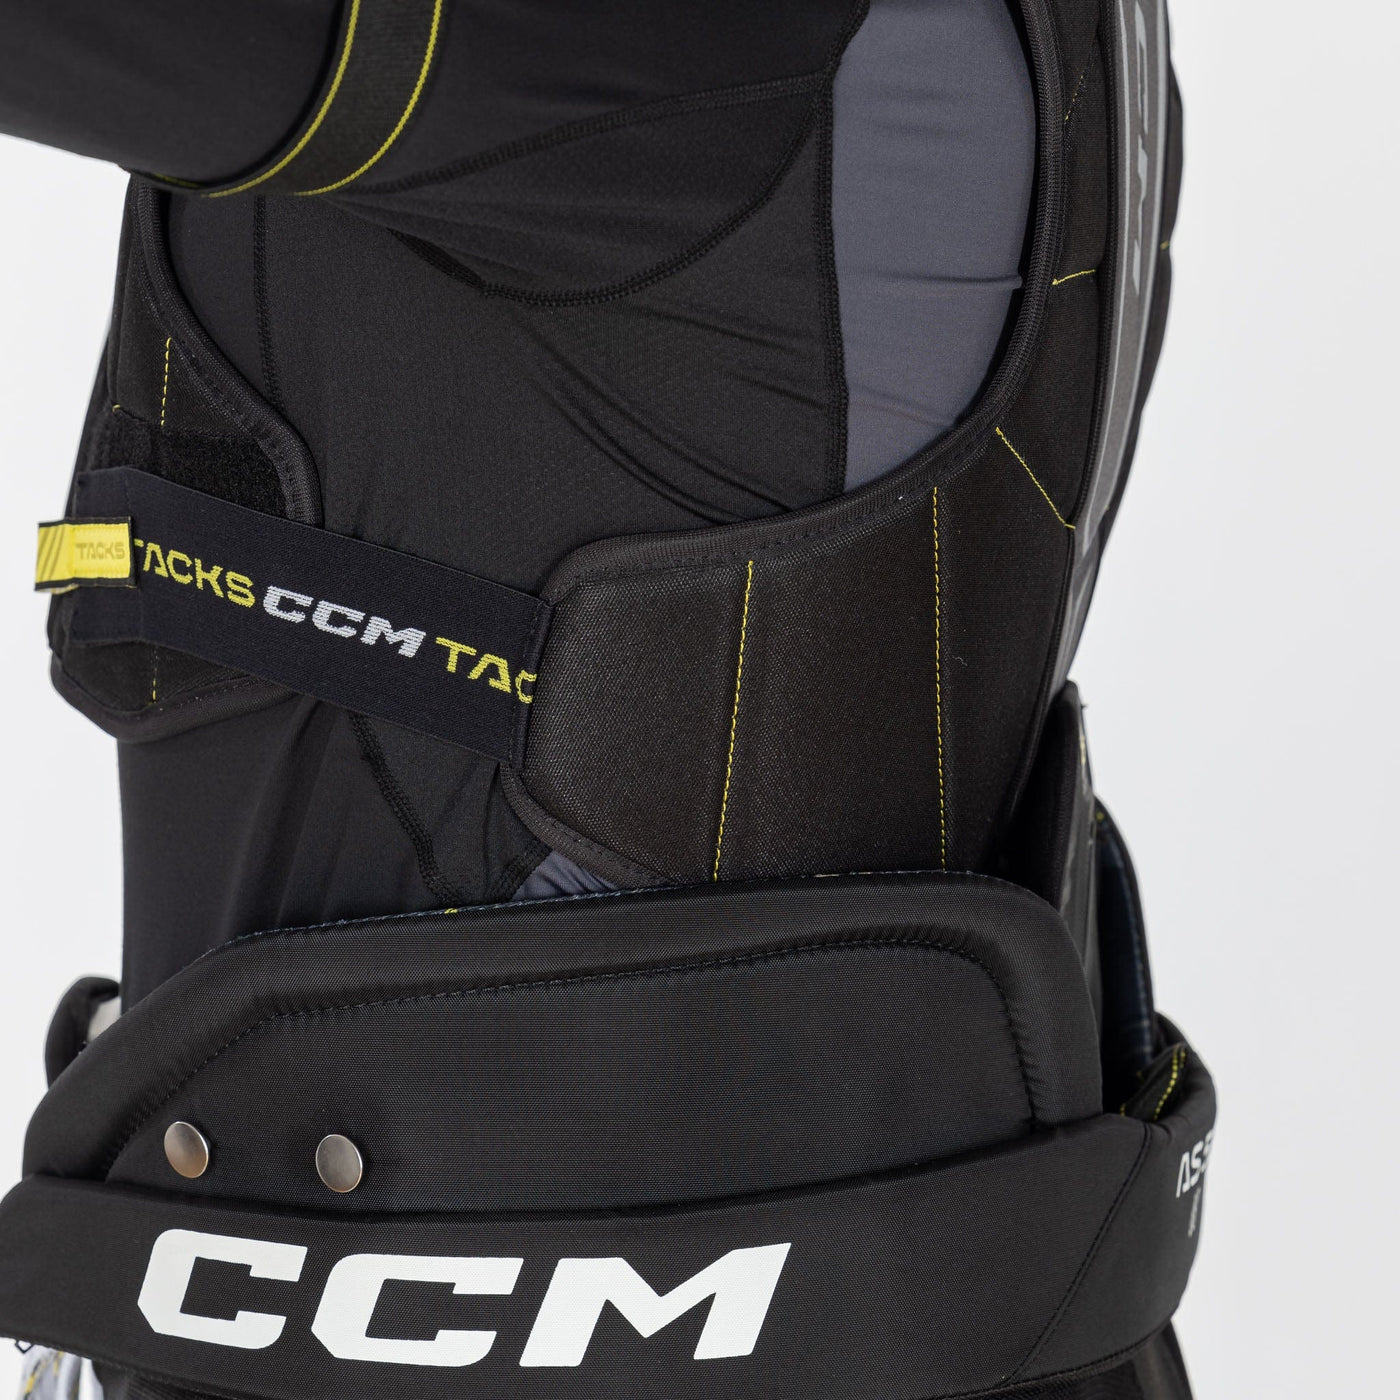 CCM Tacks Vector Senior Hockey Shoulder Pads - The Hockey Shop Source For Sports